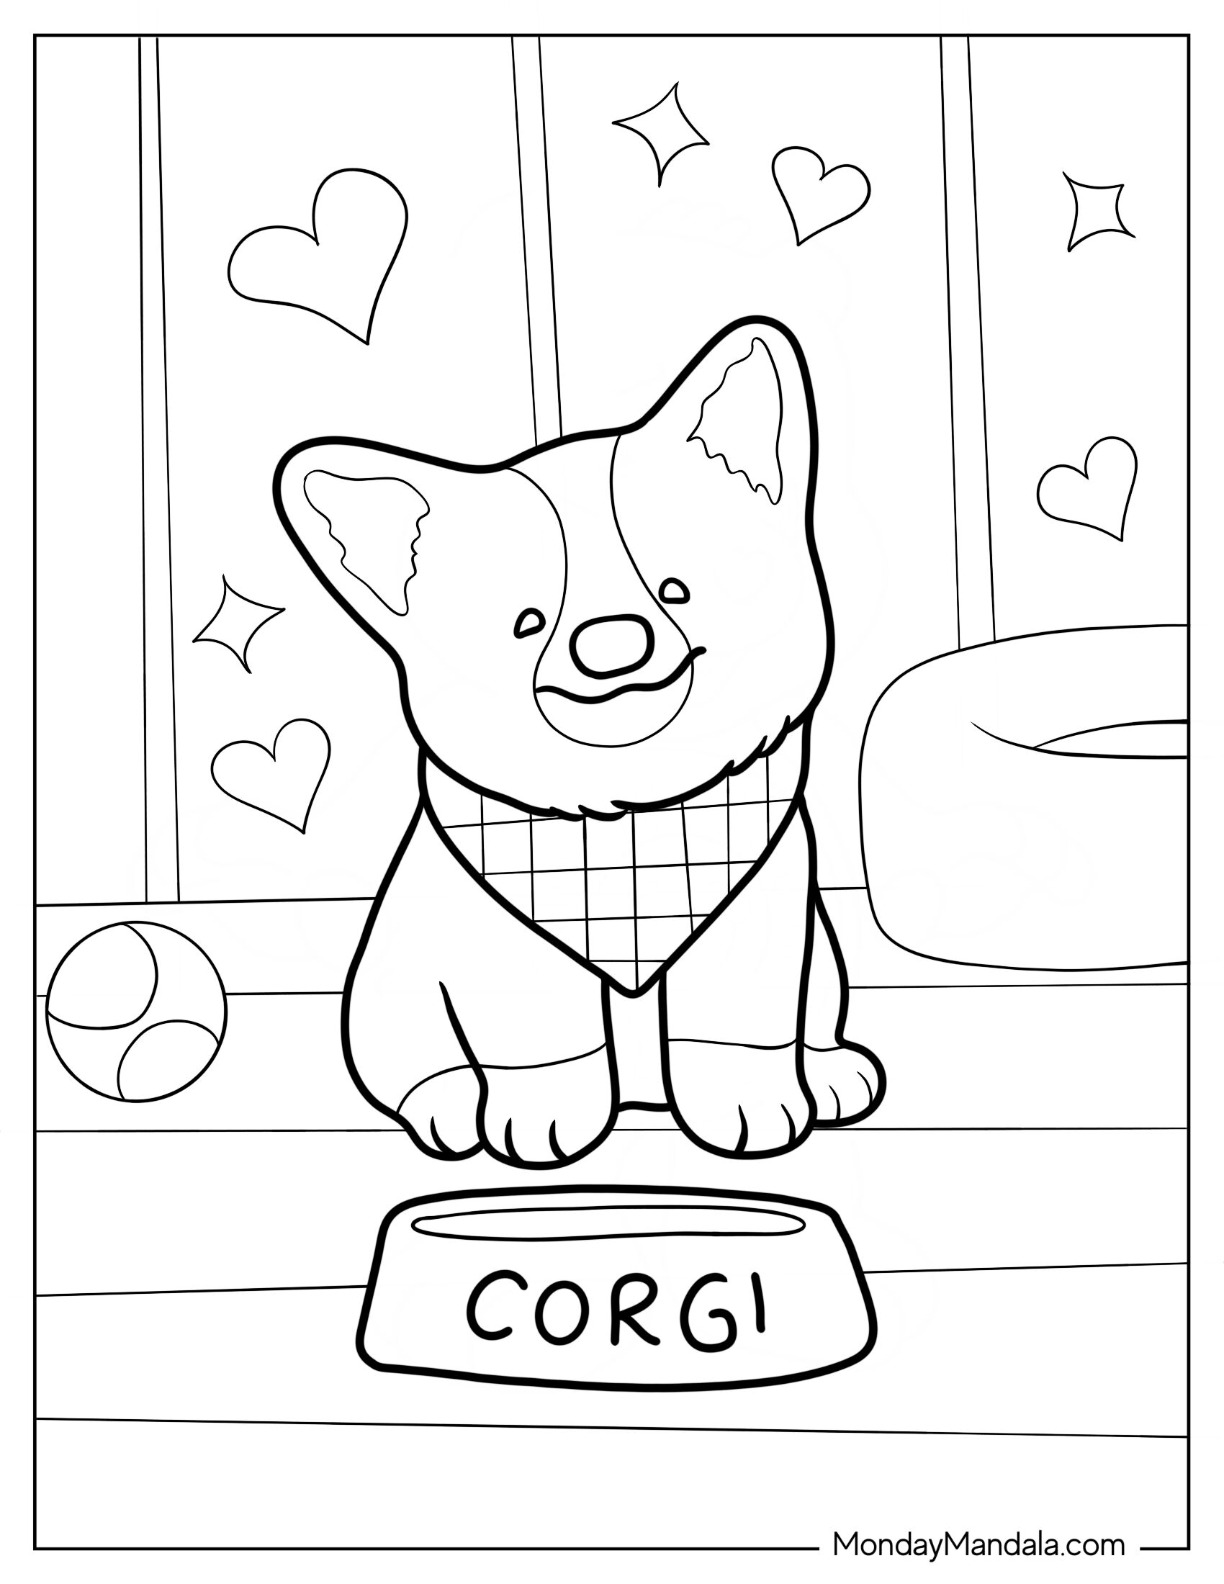 Corgi coloring pages free pdf printables